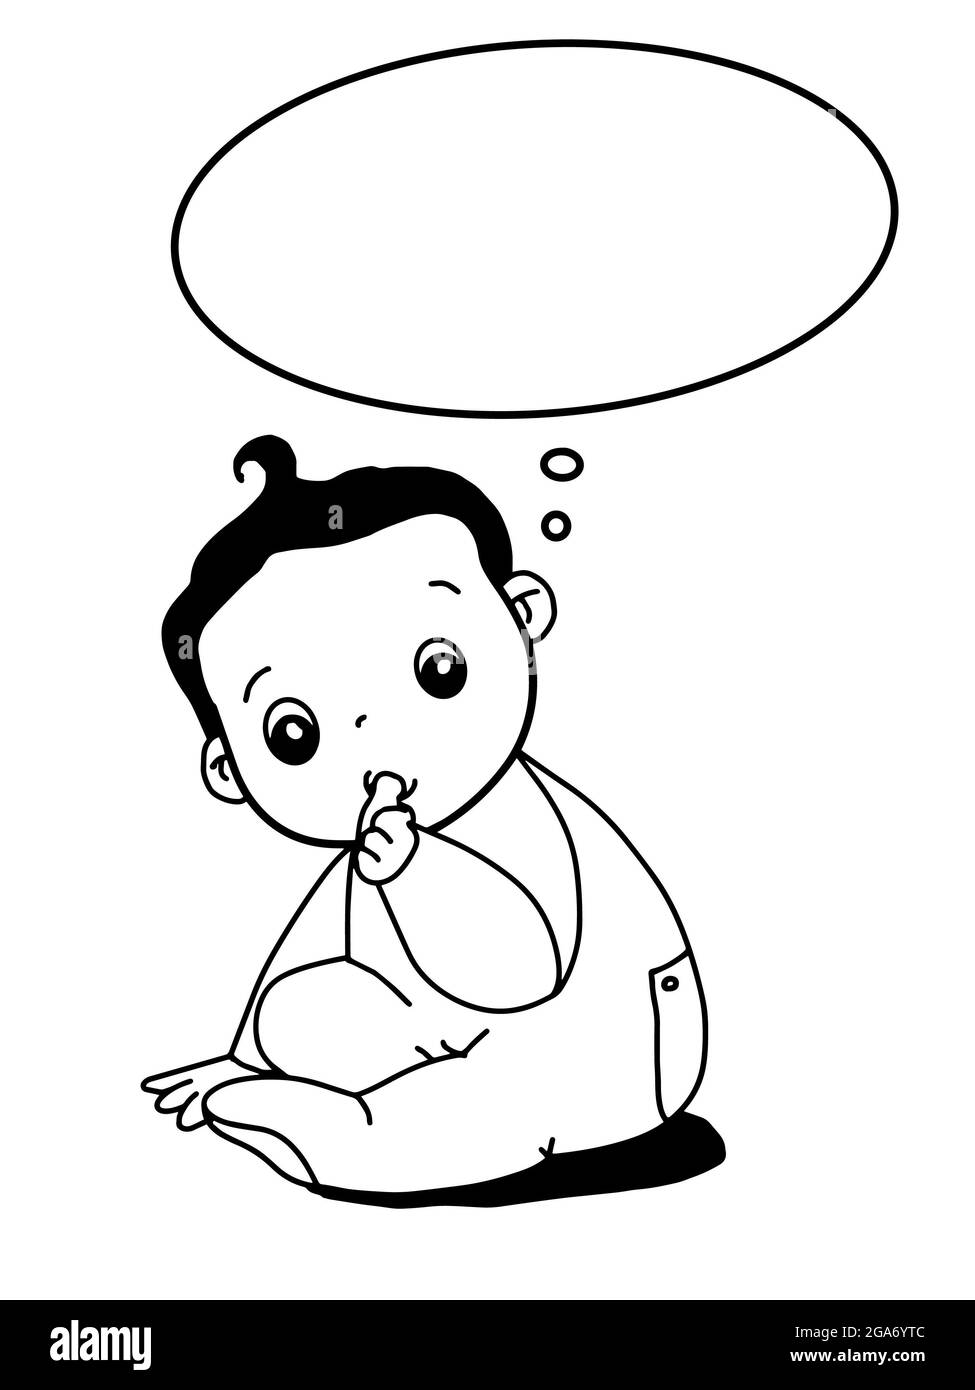 Cute baby, cartoon characters, thumb sucking,speech bubble,black white  colors Stock Photo - Alamy